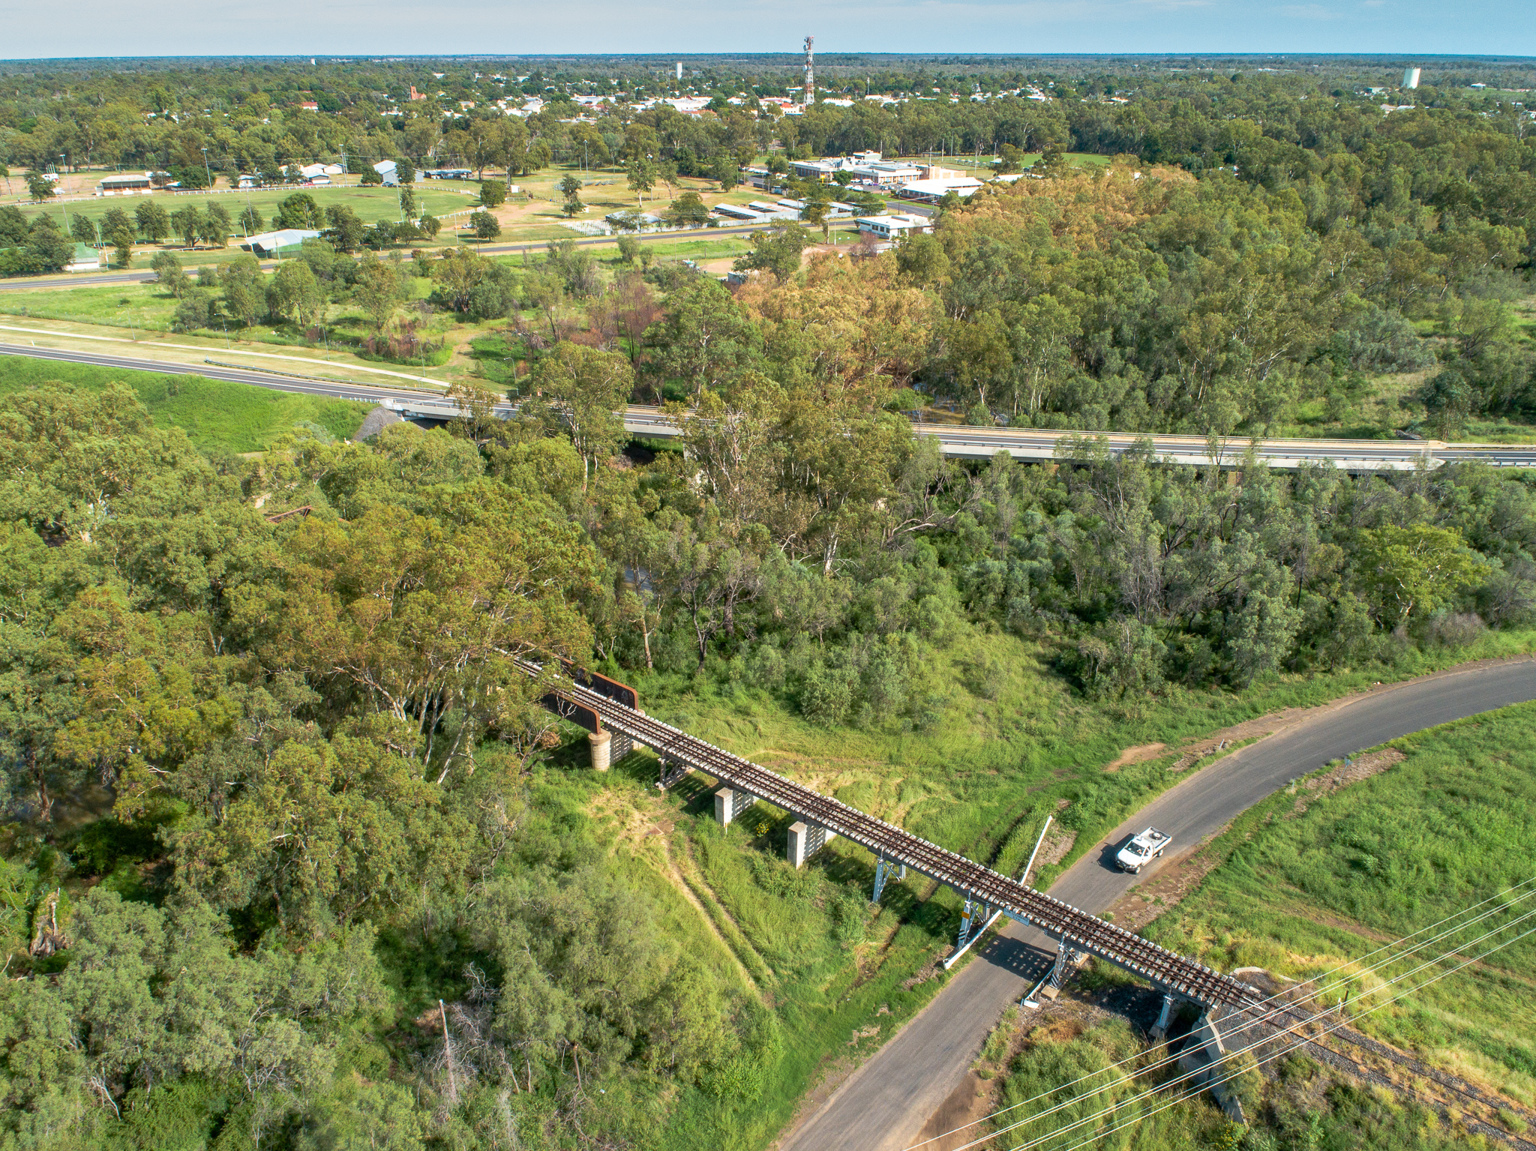 Aerial view of Mehi River rail bridge, Moree, New South Wales.